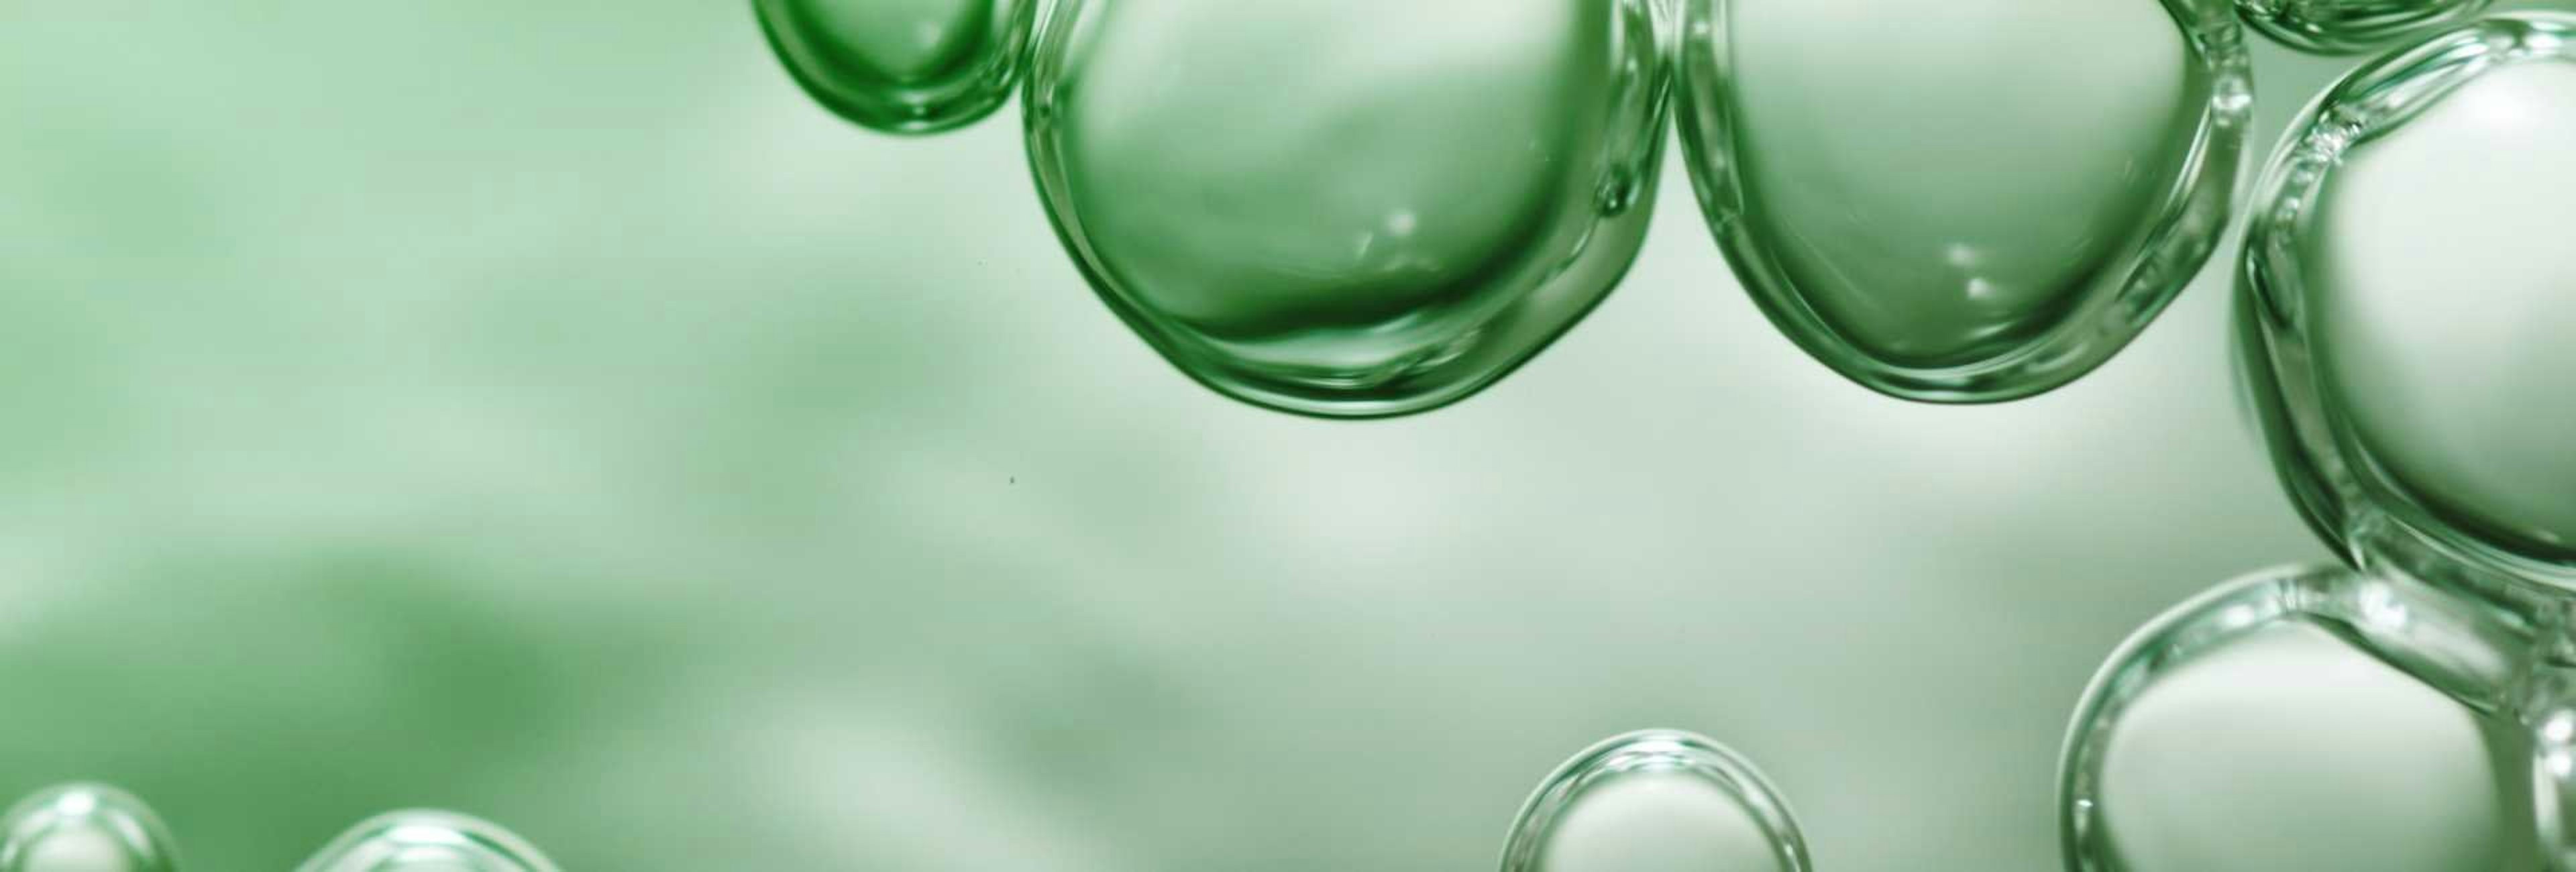 green hydrogen molecules microscopic illustration